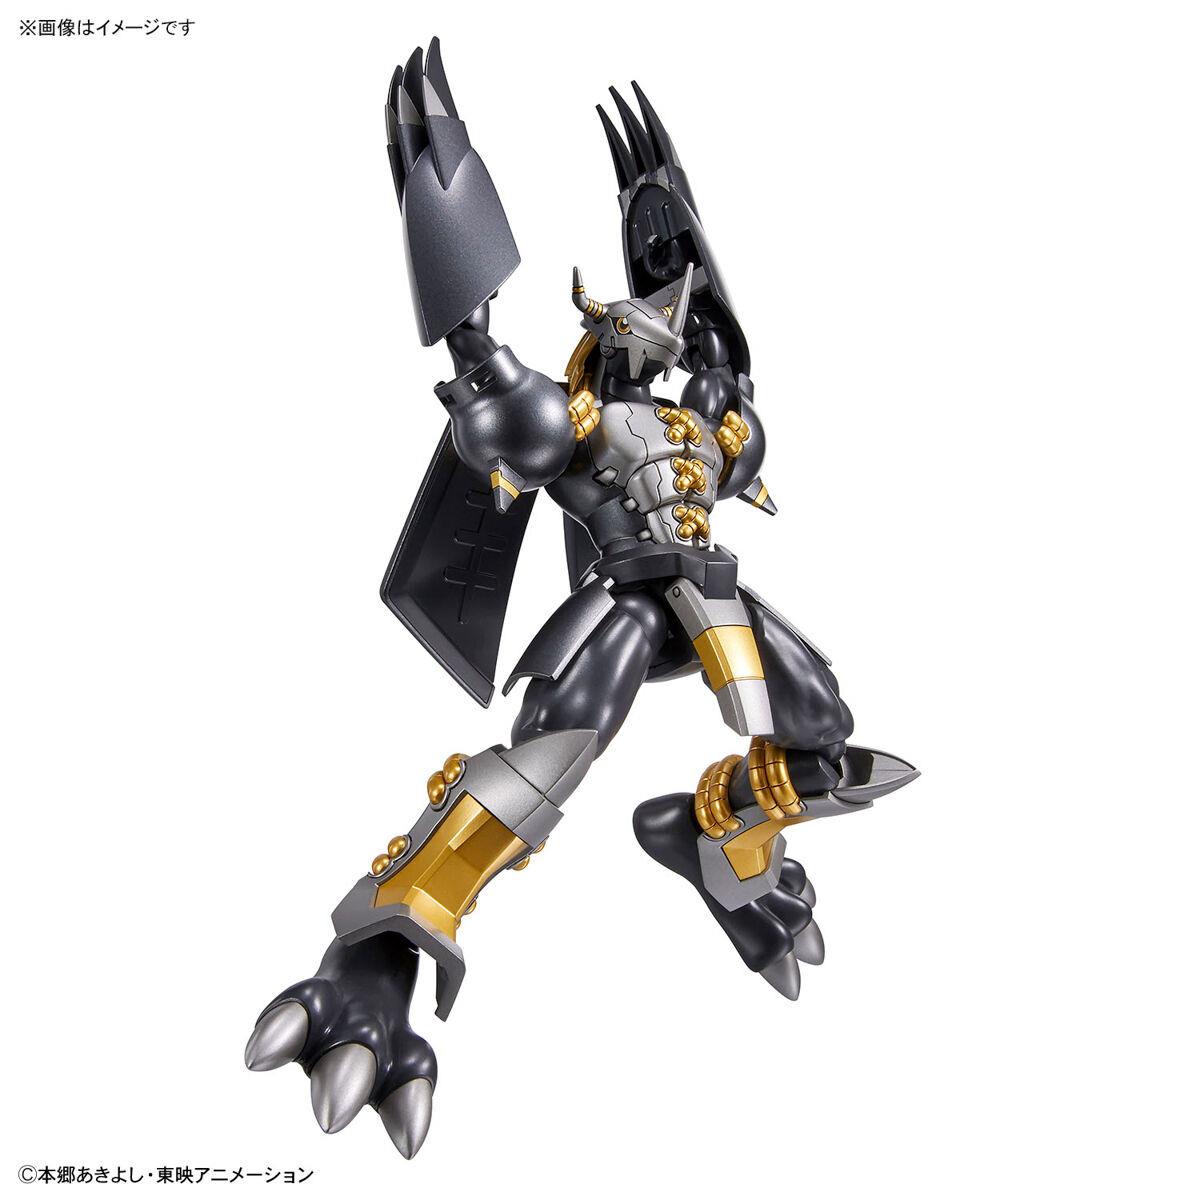 Digimon: Black Wargreymon Figure-Rise Model